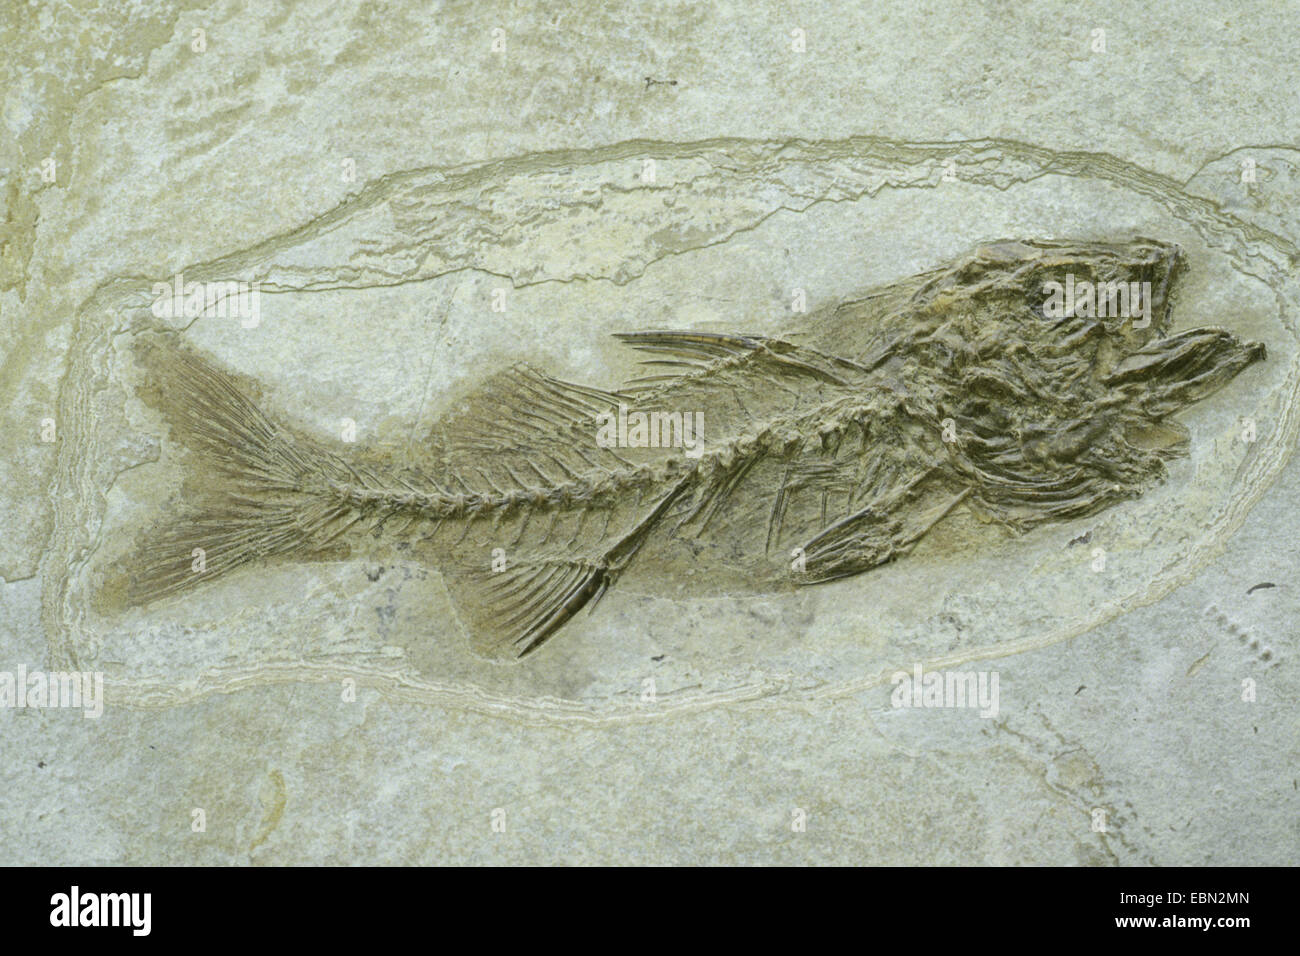 bony fish (Dapalis spec.), extinct bony fish from oligocene, France Stock Photo